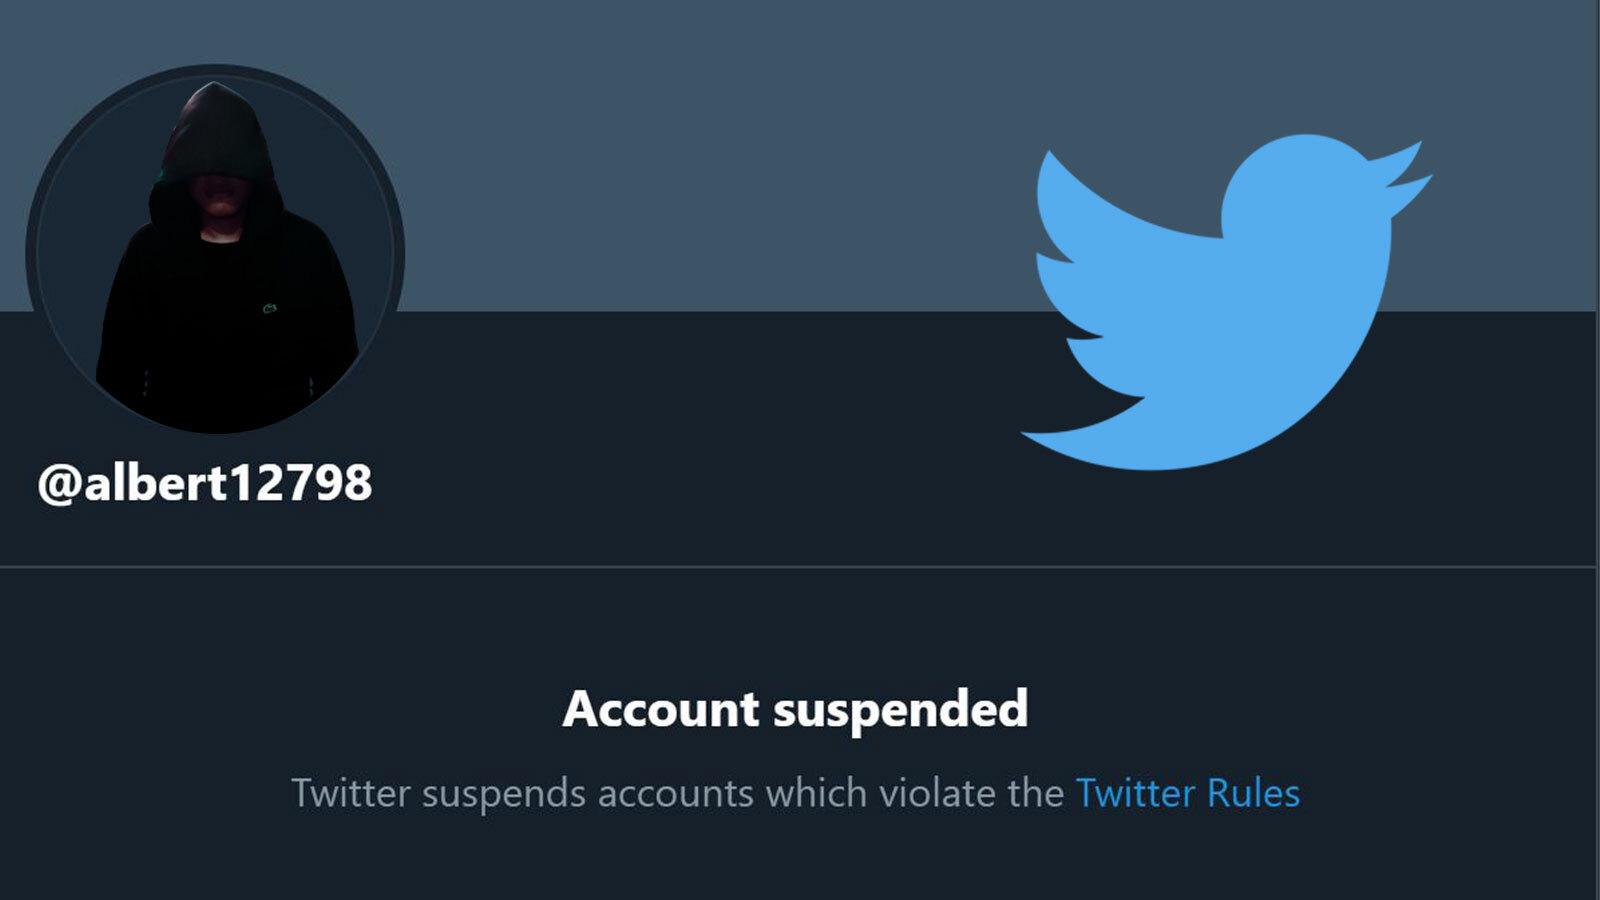 Albert banned from Twitter